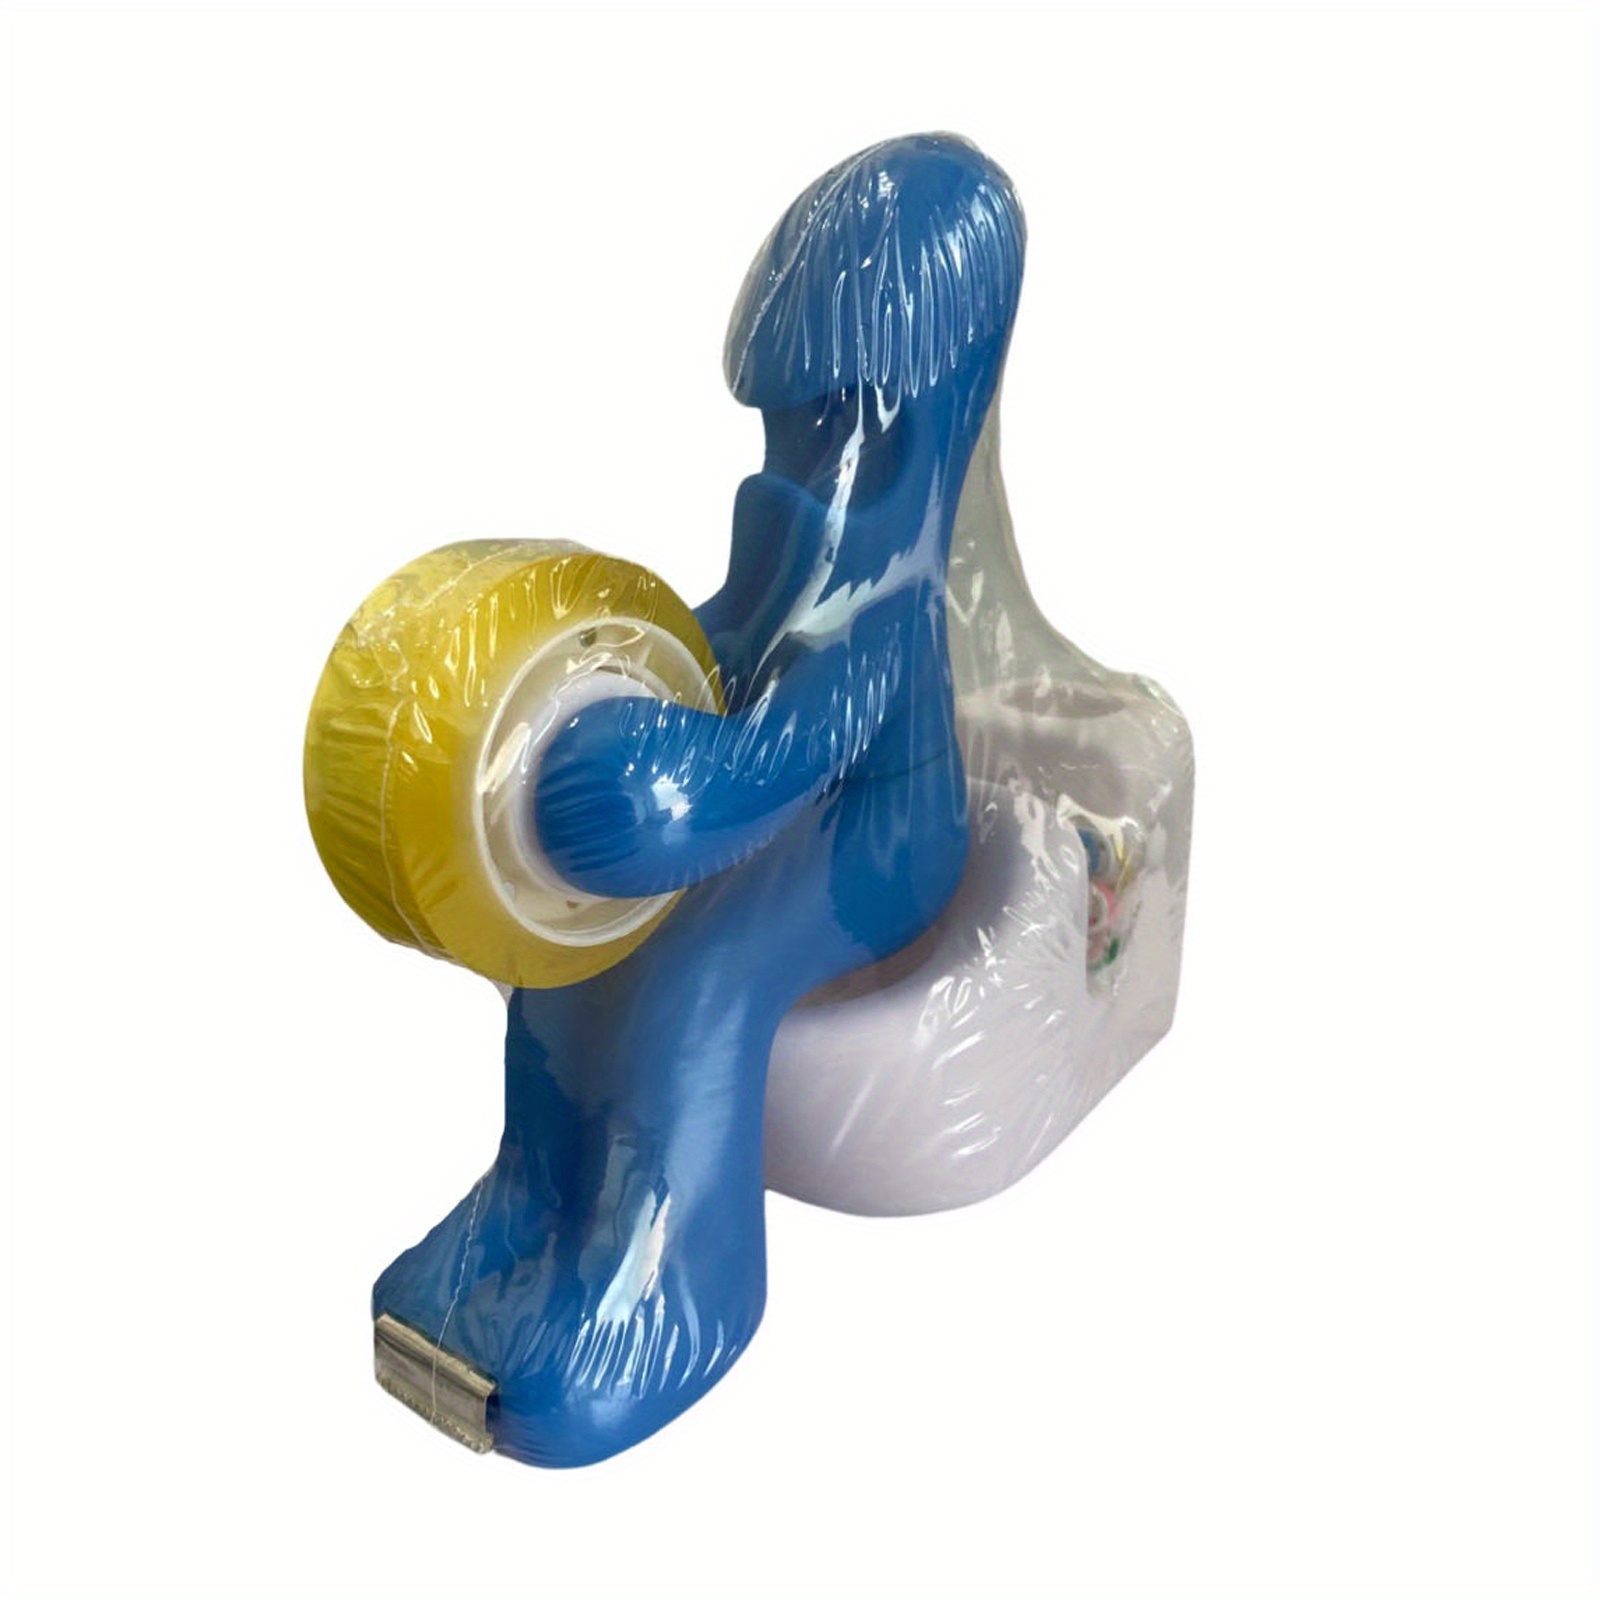  The Butt Tape Dispenser – Funny Gifts for Men – Weird